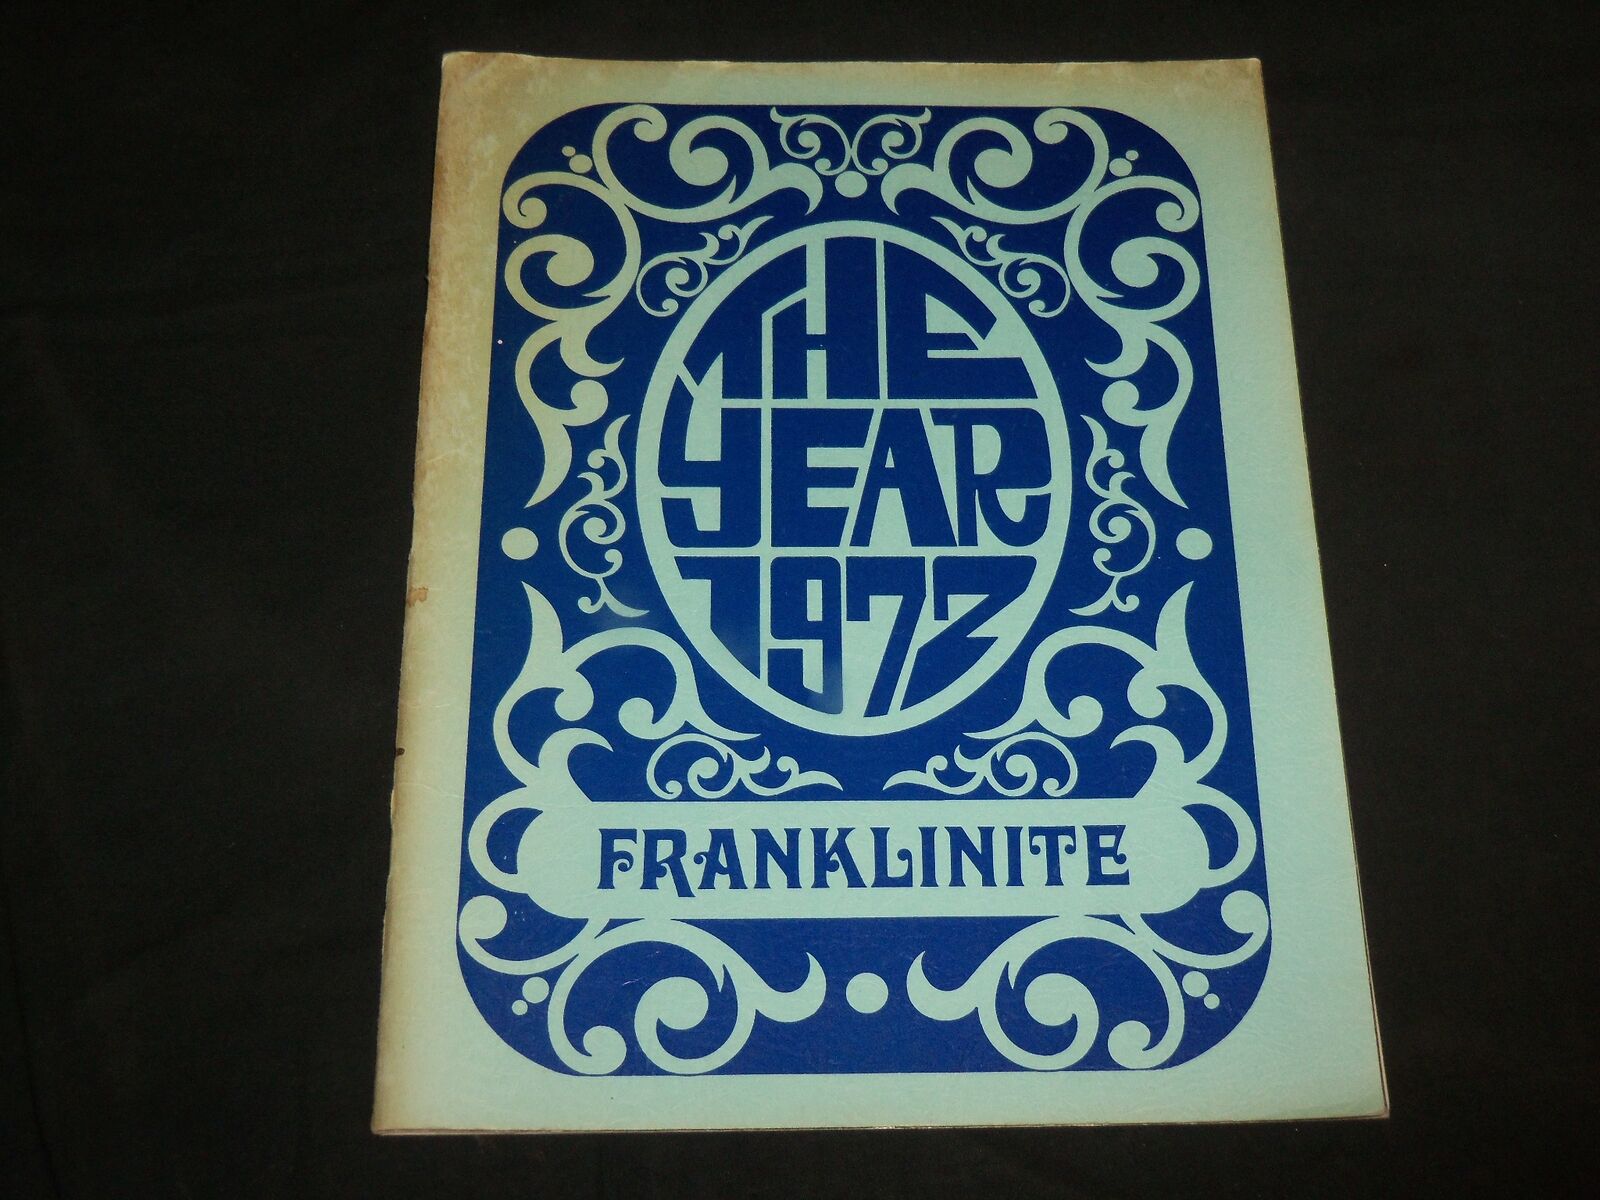 1972 FRANKLINITE FRANKLIN SCHOOL YEARBOOK - NEW JERSEY - J 6843